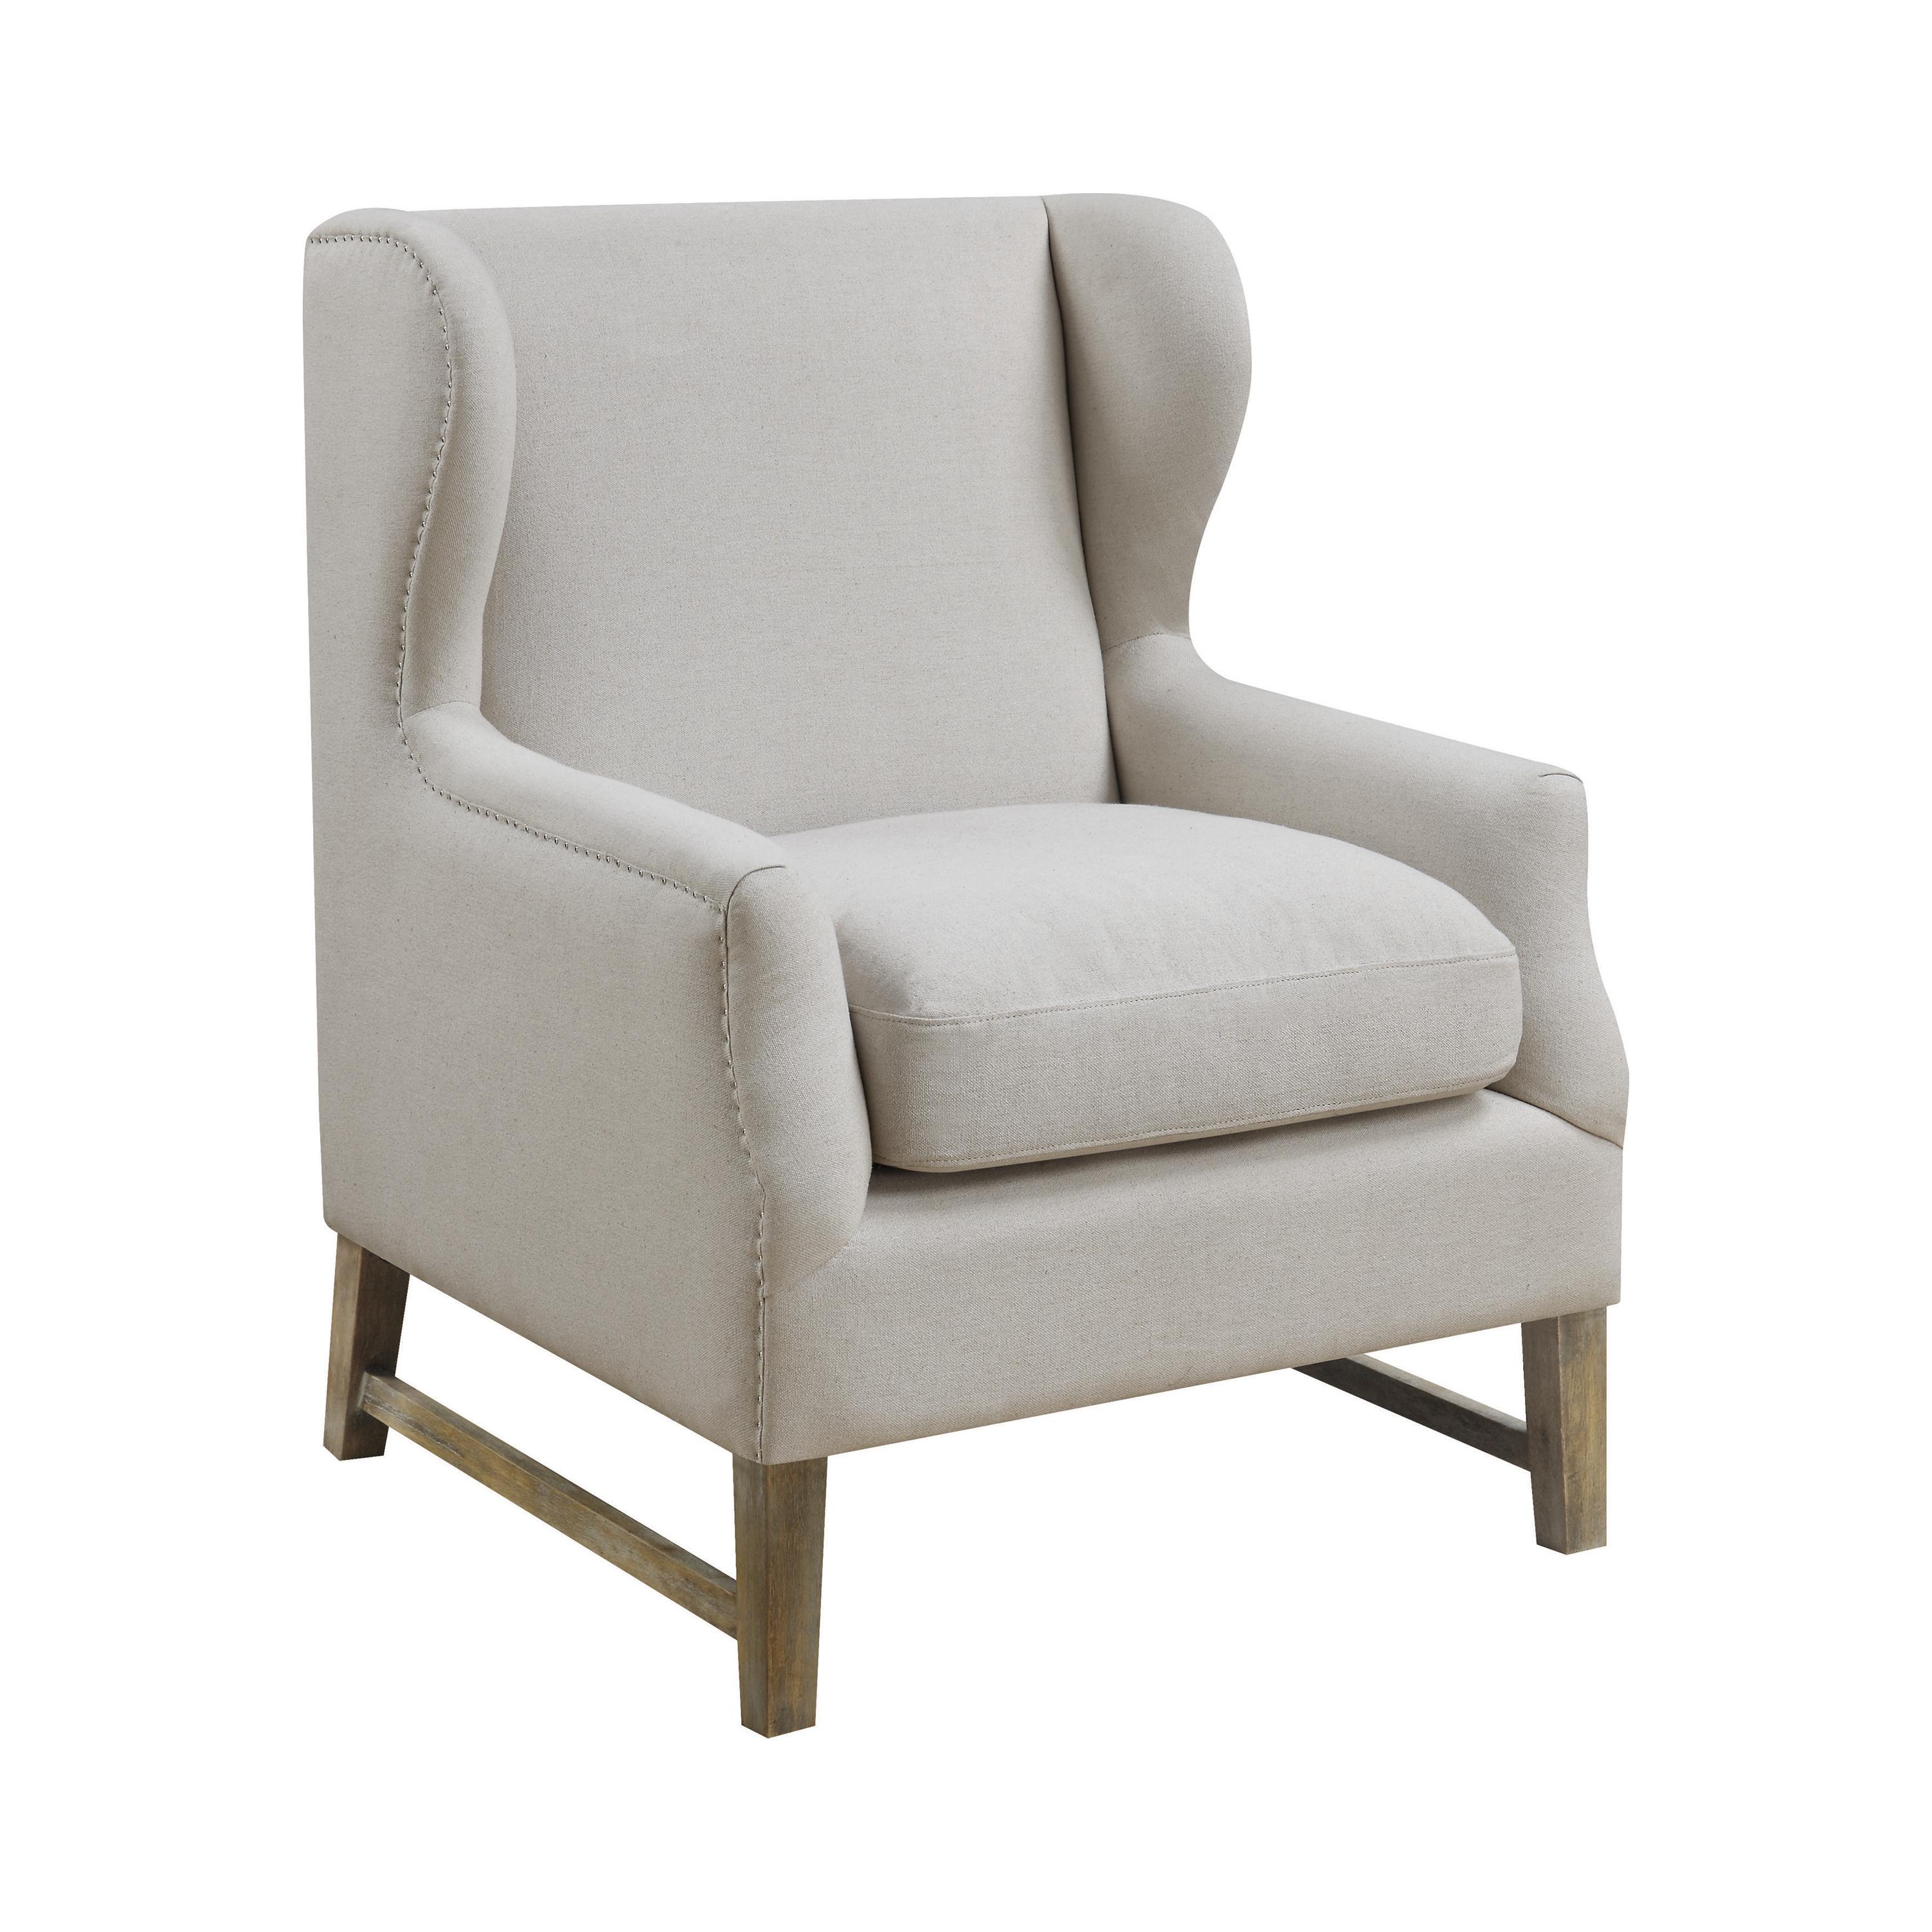 Modern Accent Chair 902490 902490 in Cream 